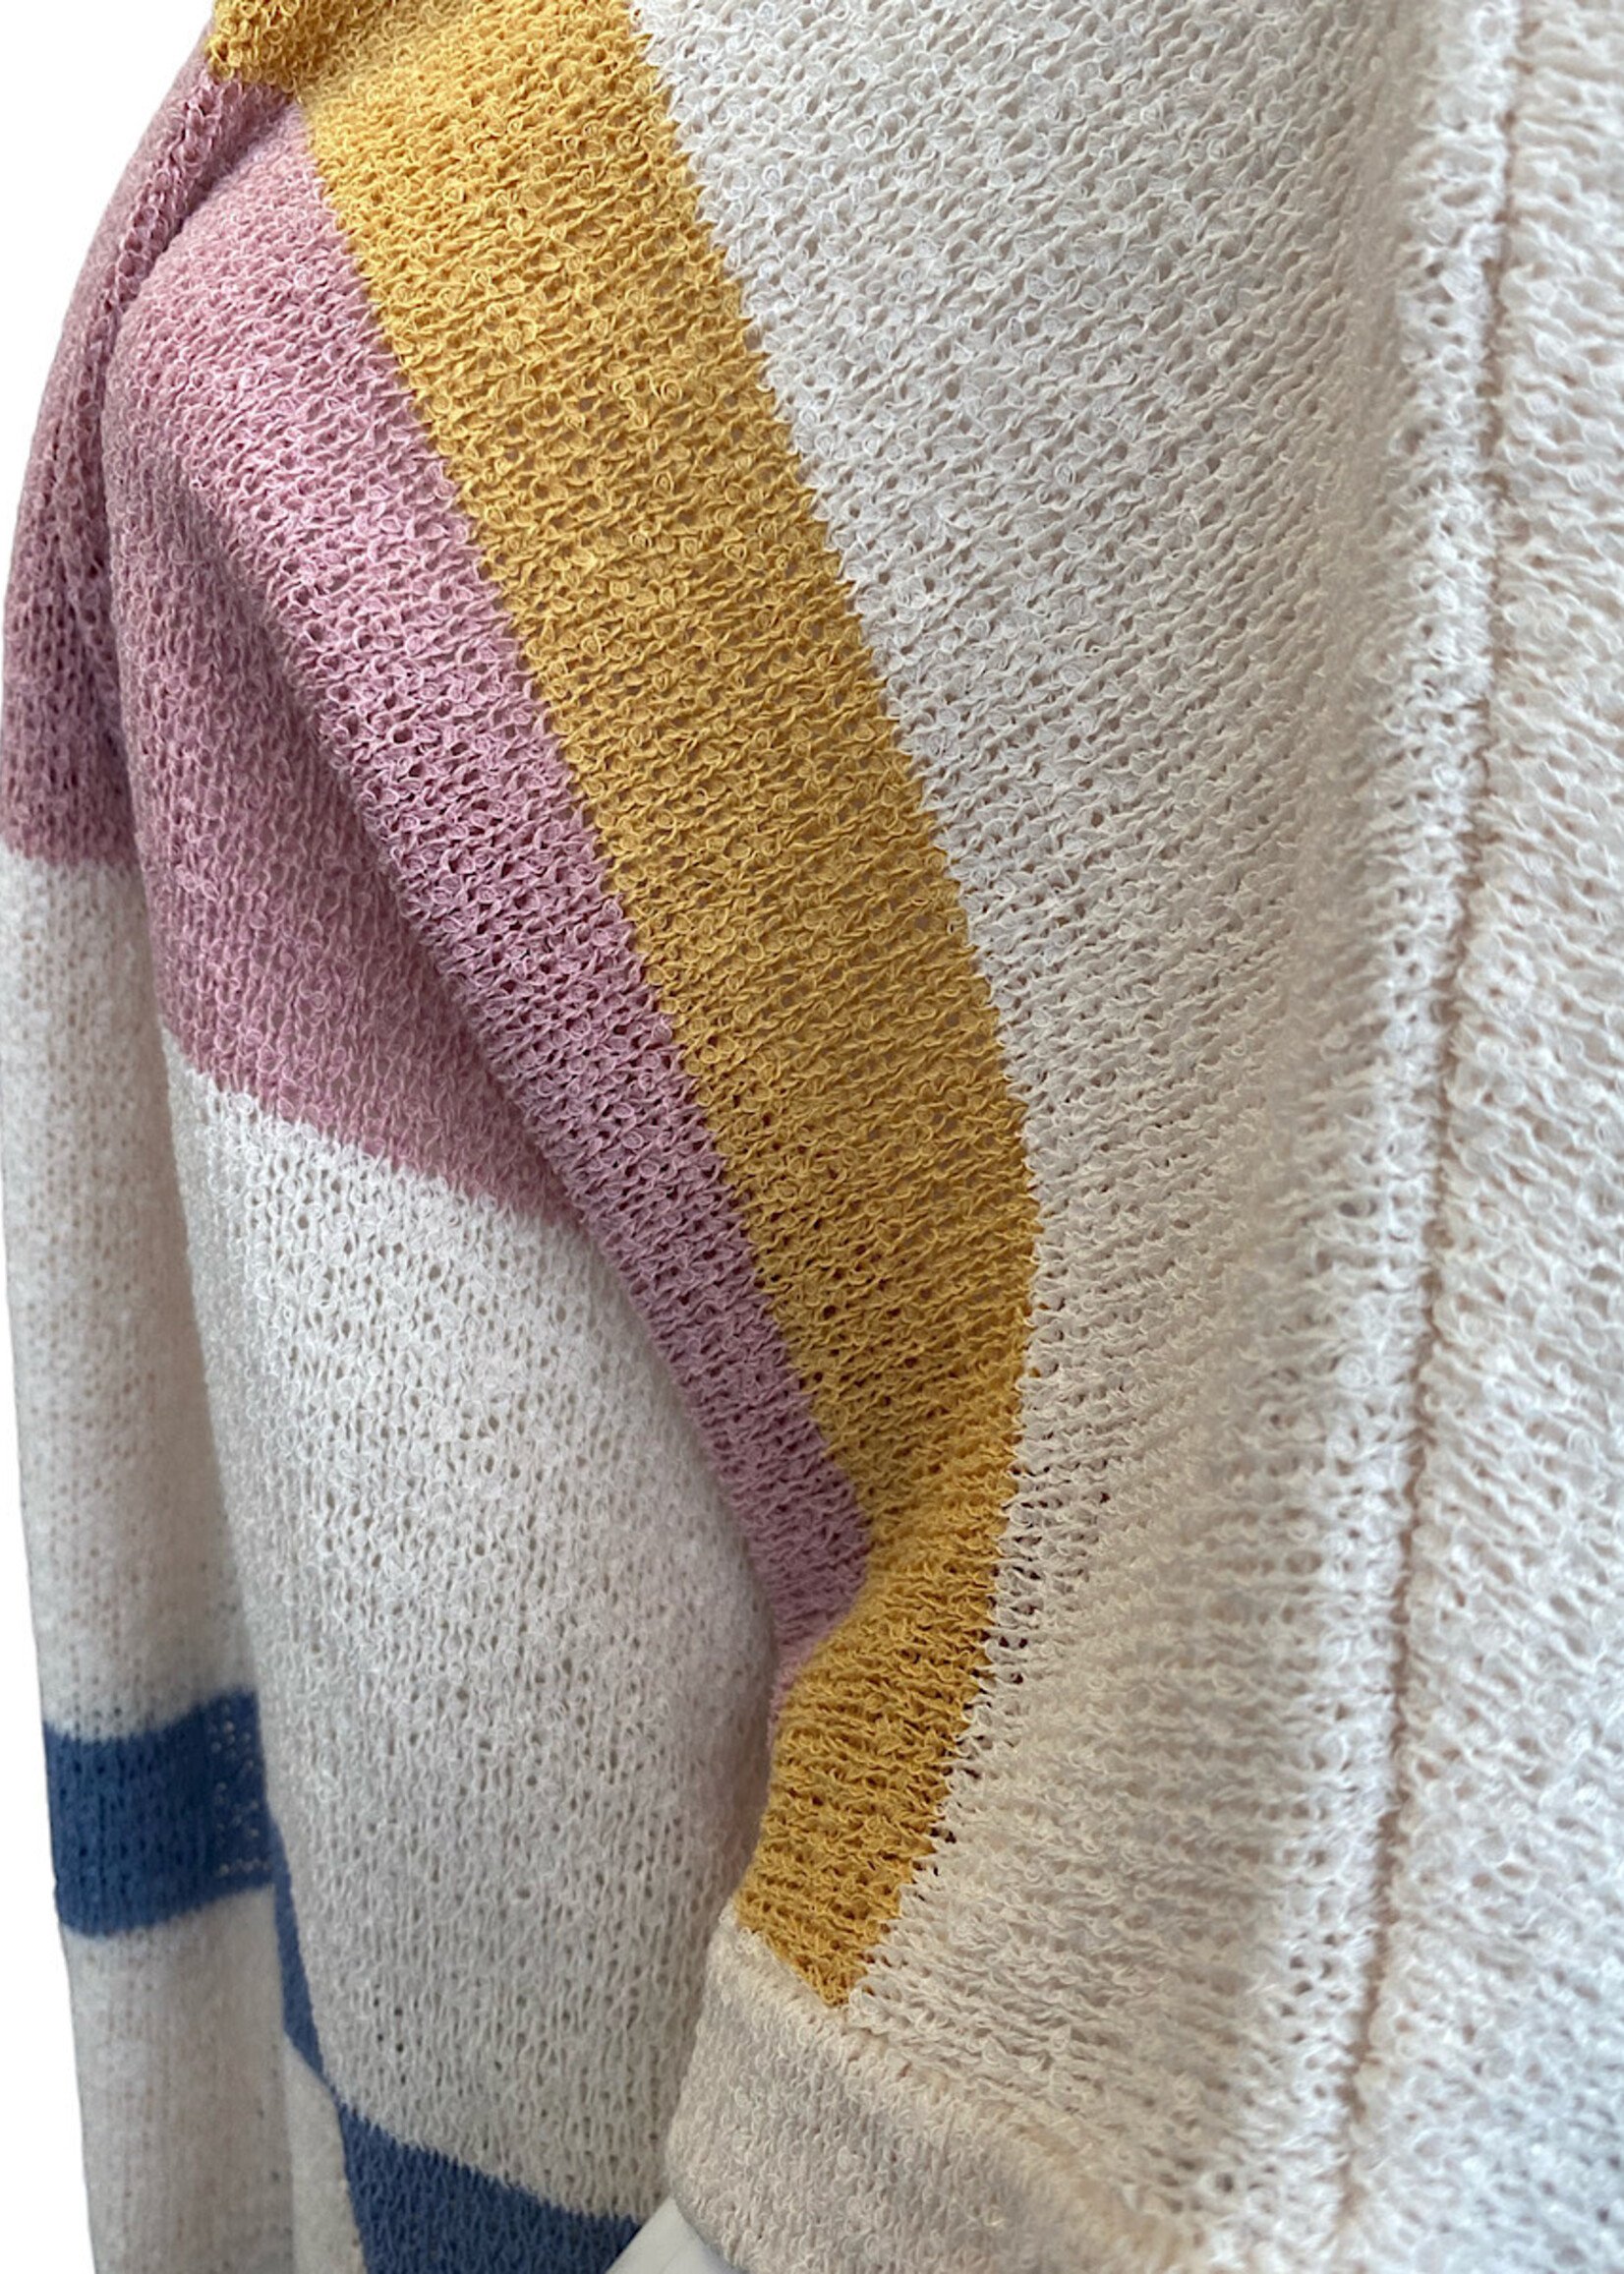 Off White/Blue Lightweight Multi Stripe Sweater Cardigan